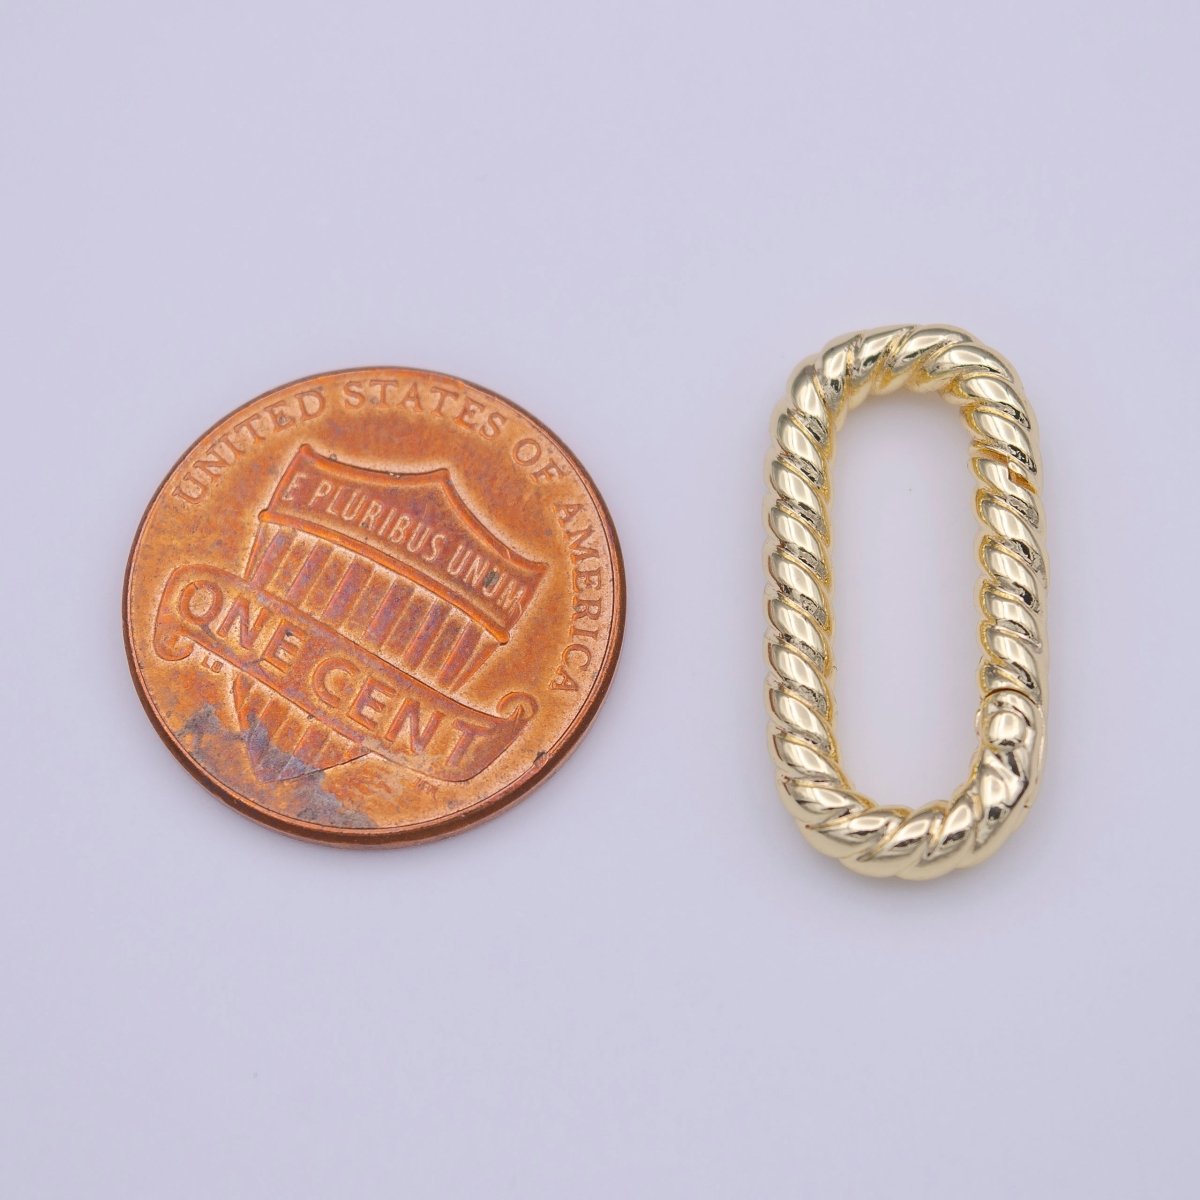 Gold Braided Twist 21.7mm Oblong Oval Push Spring Gate Jewelry Supply | K-221 - DLUXCA